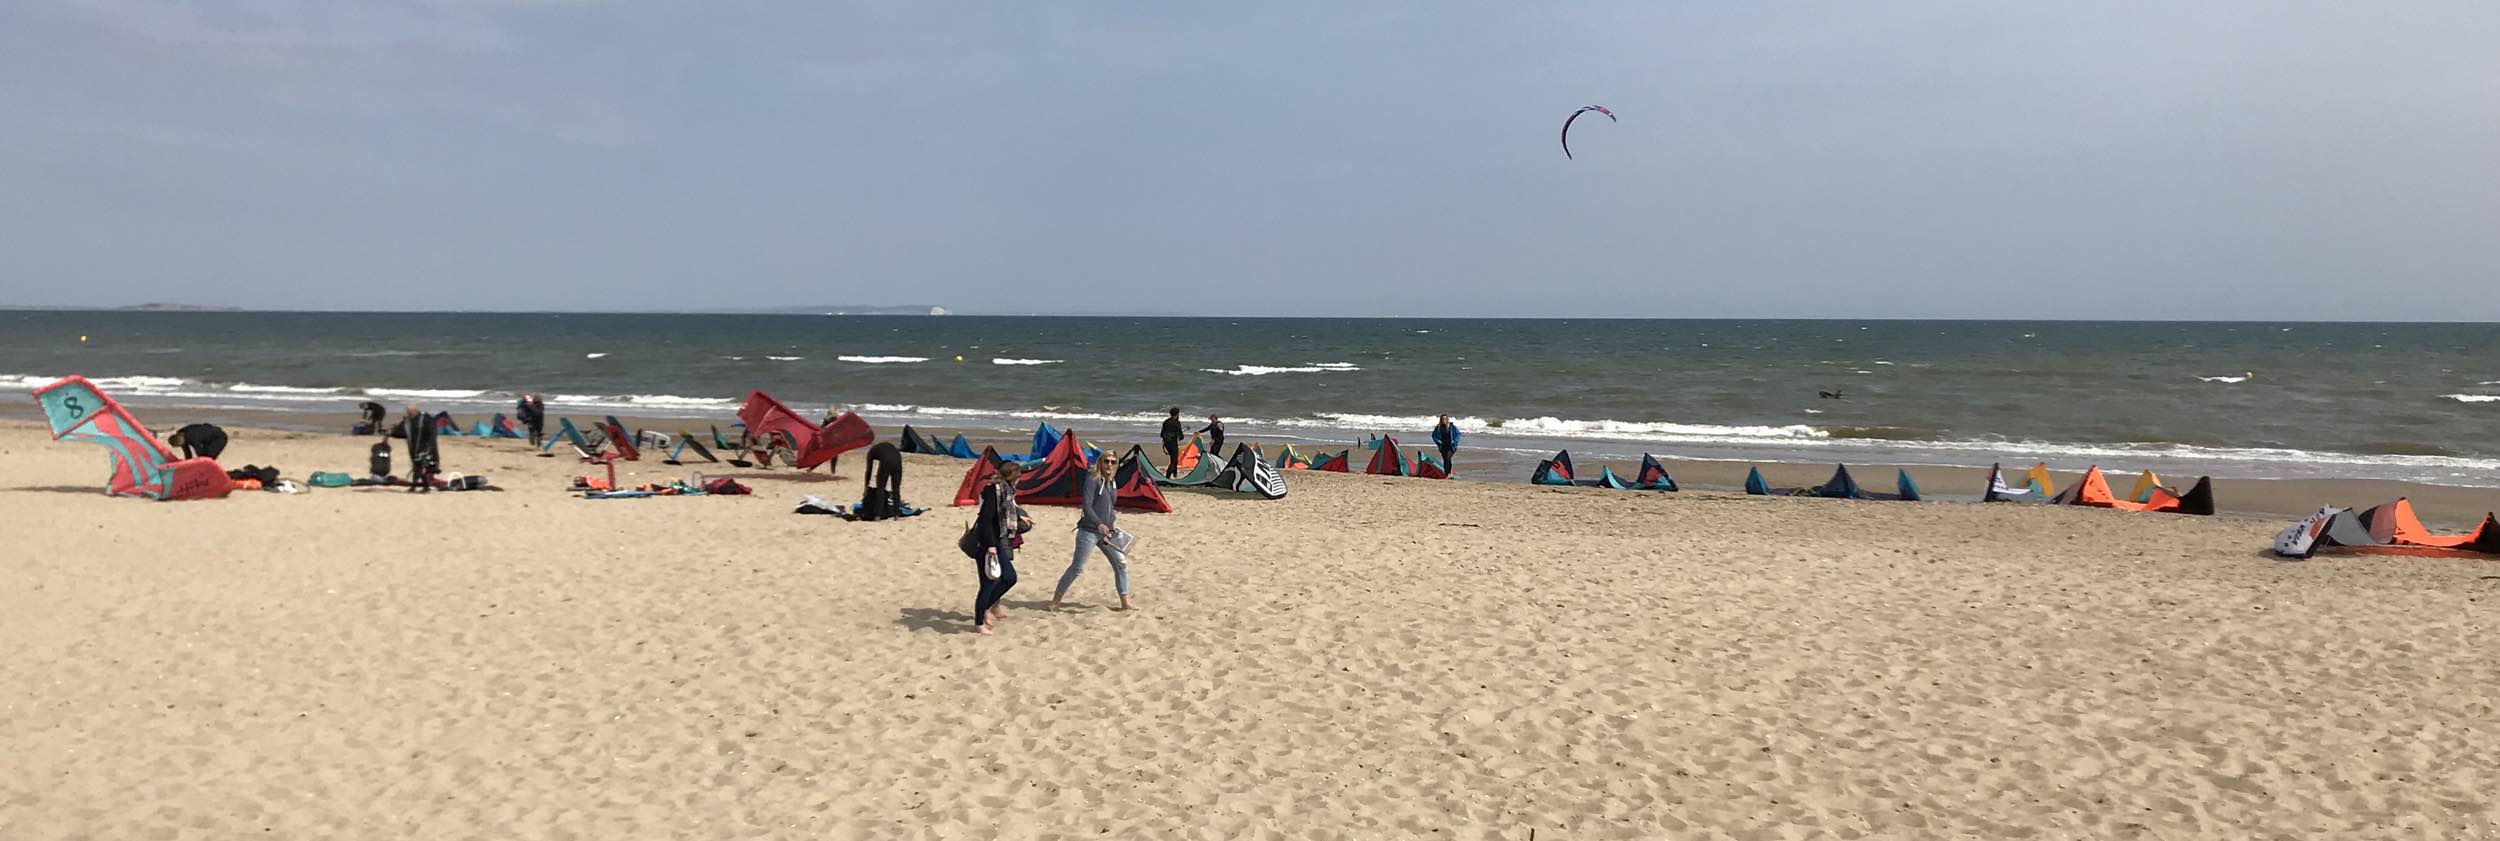 Kitesurfing in Poole